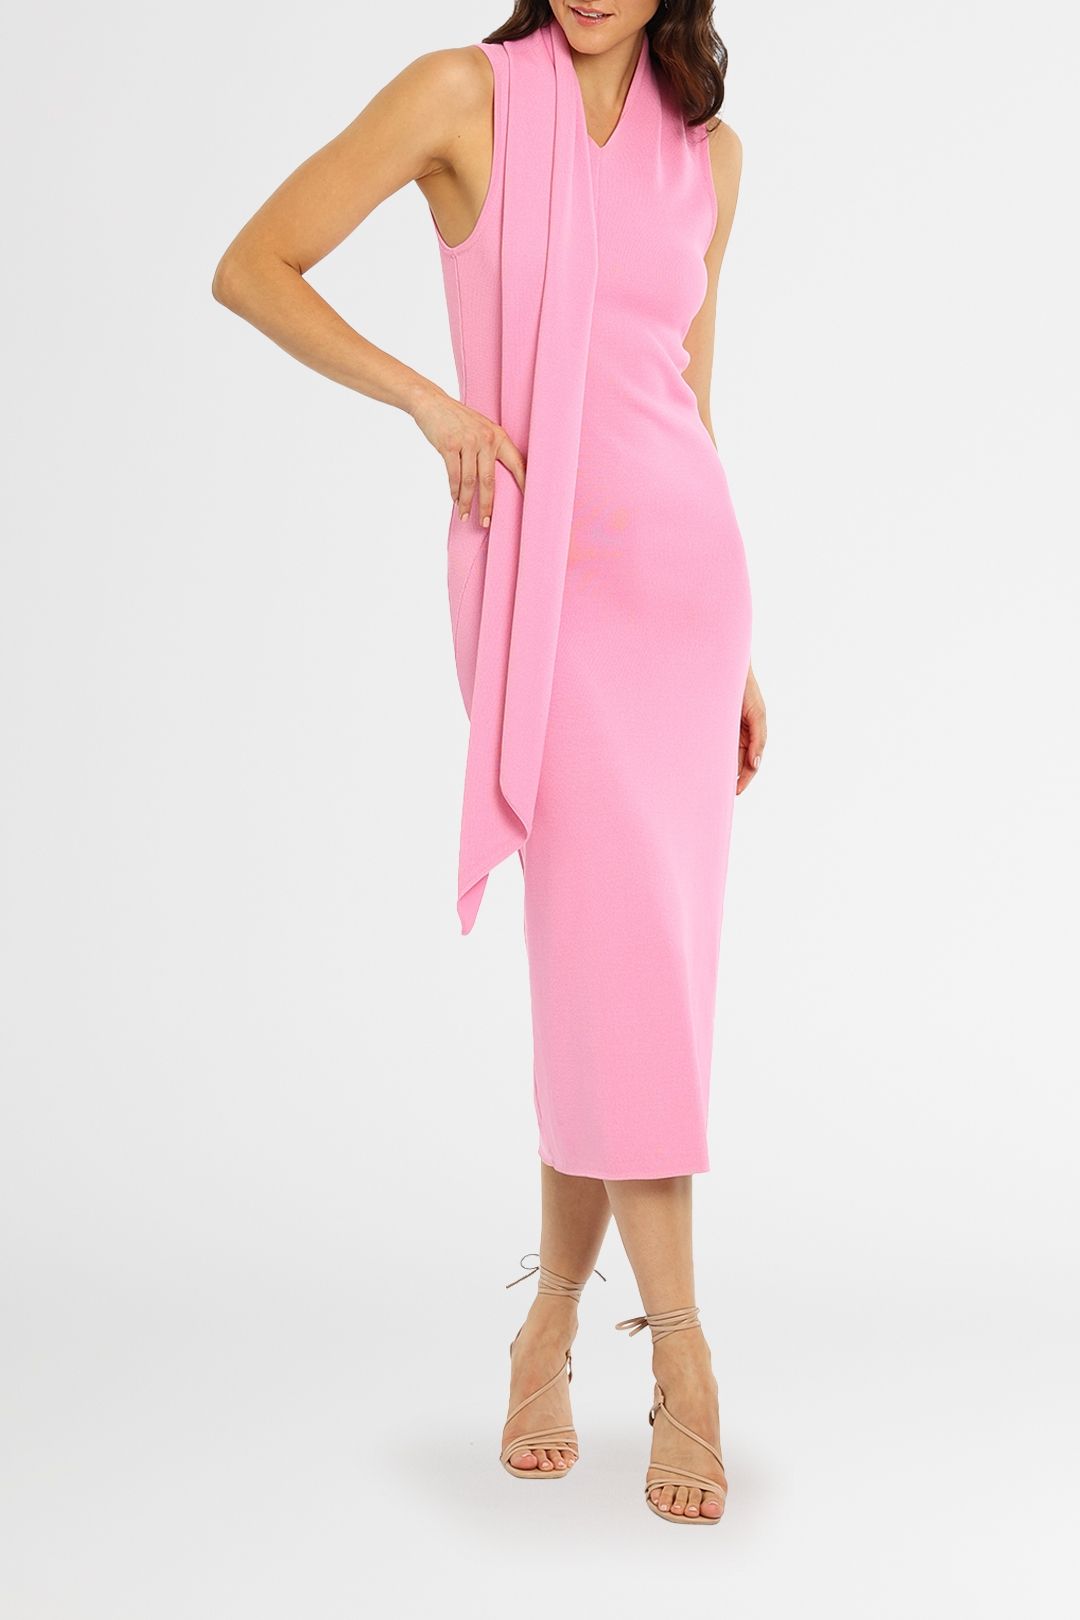 Acler Aster Dress Pink sleeveless